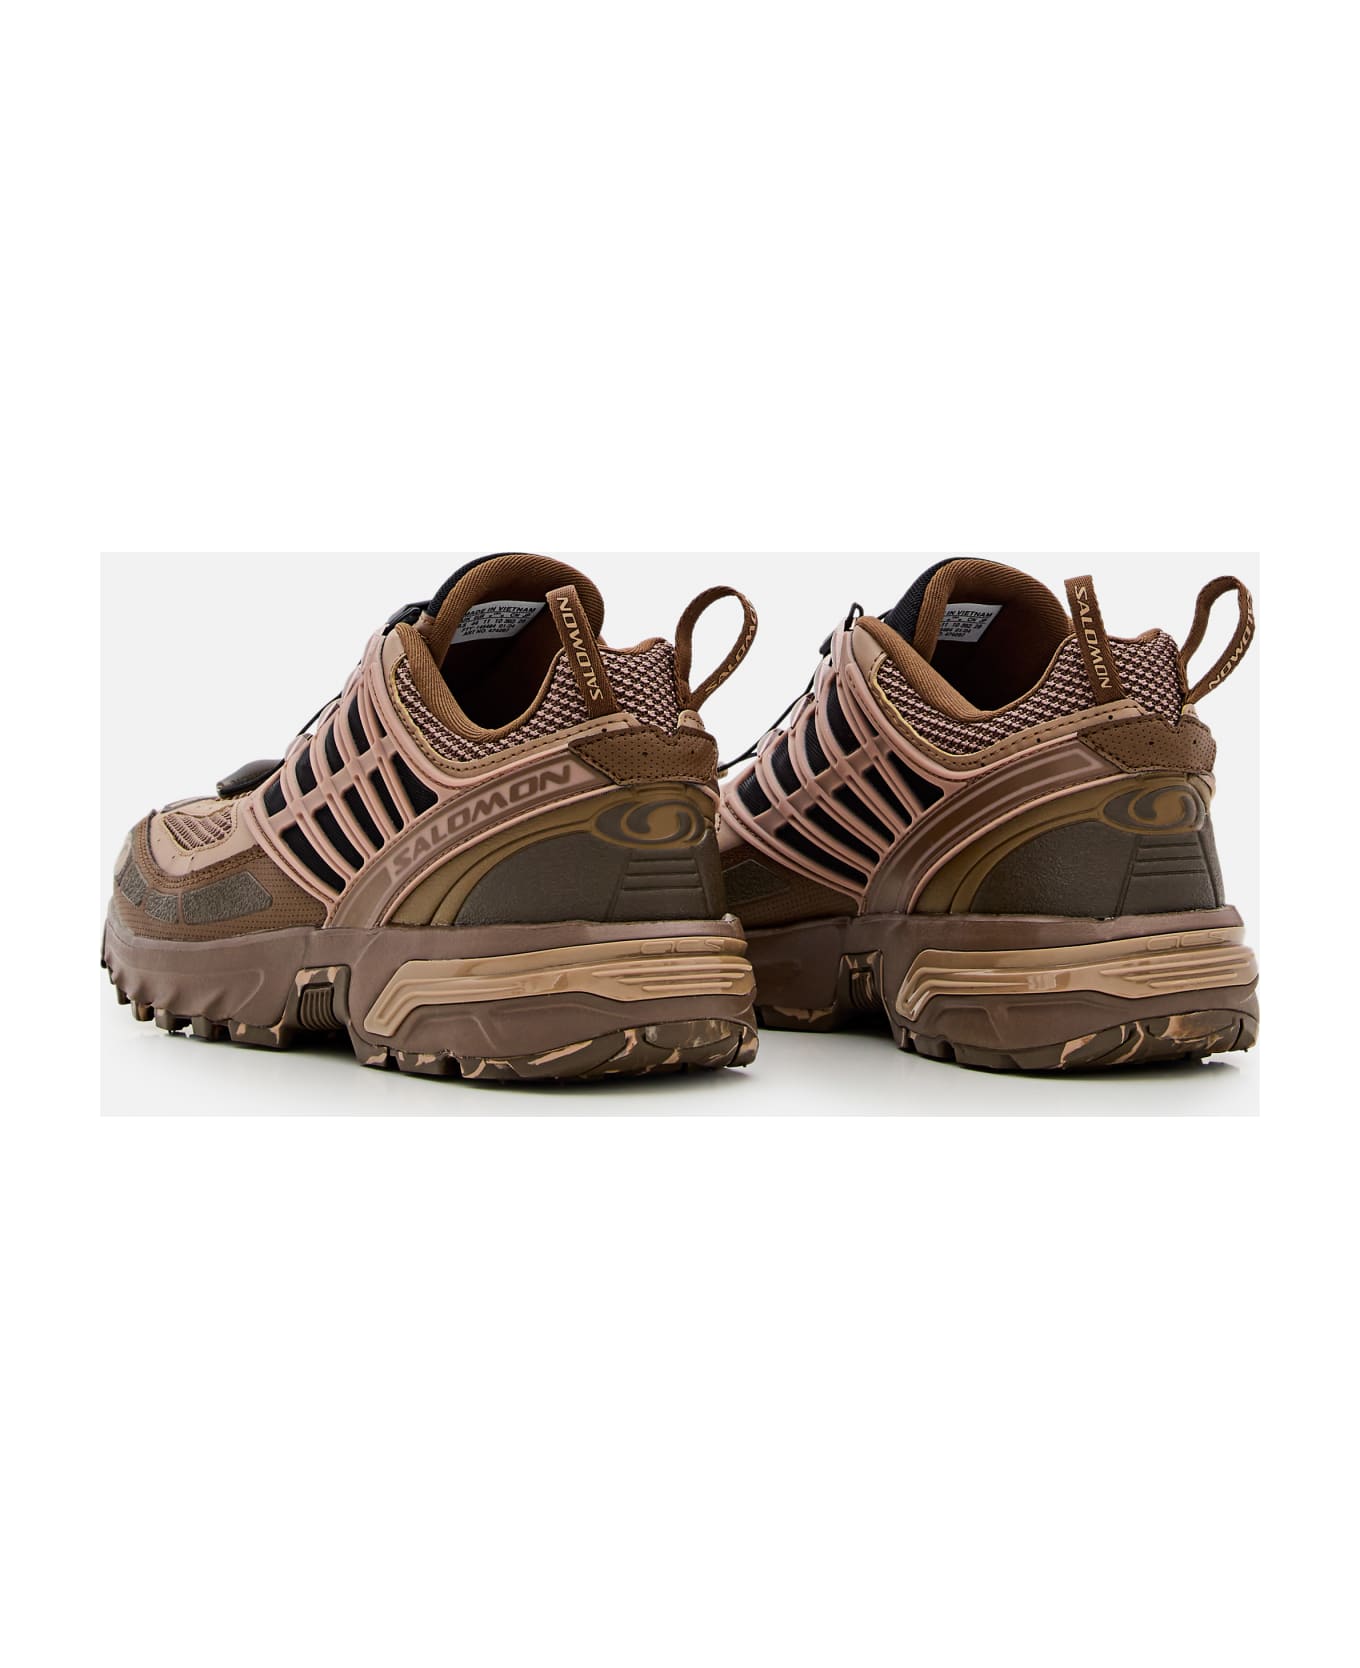 Salomon Acs Pro Desert Sneakers - Brown